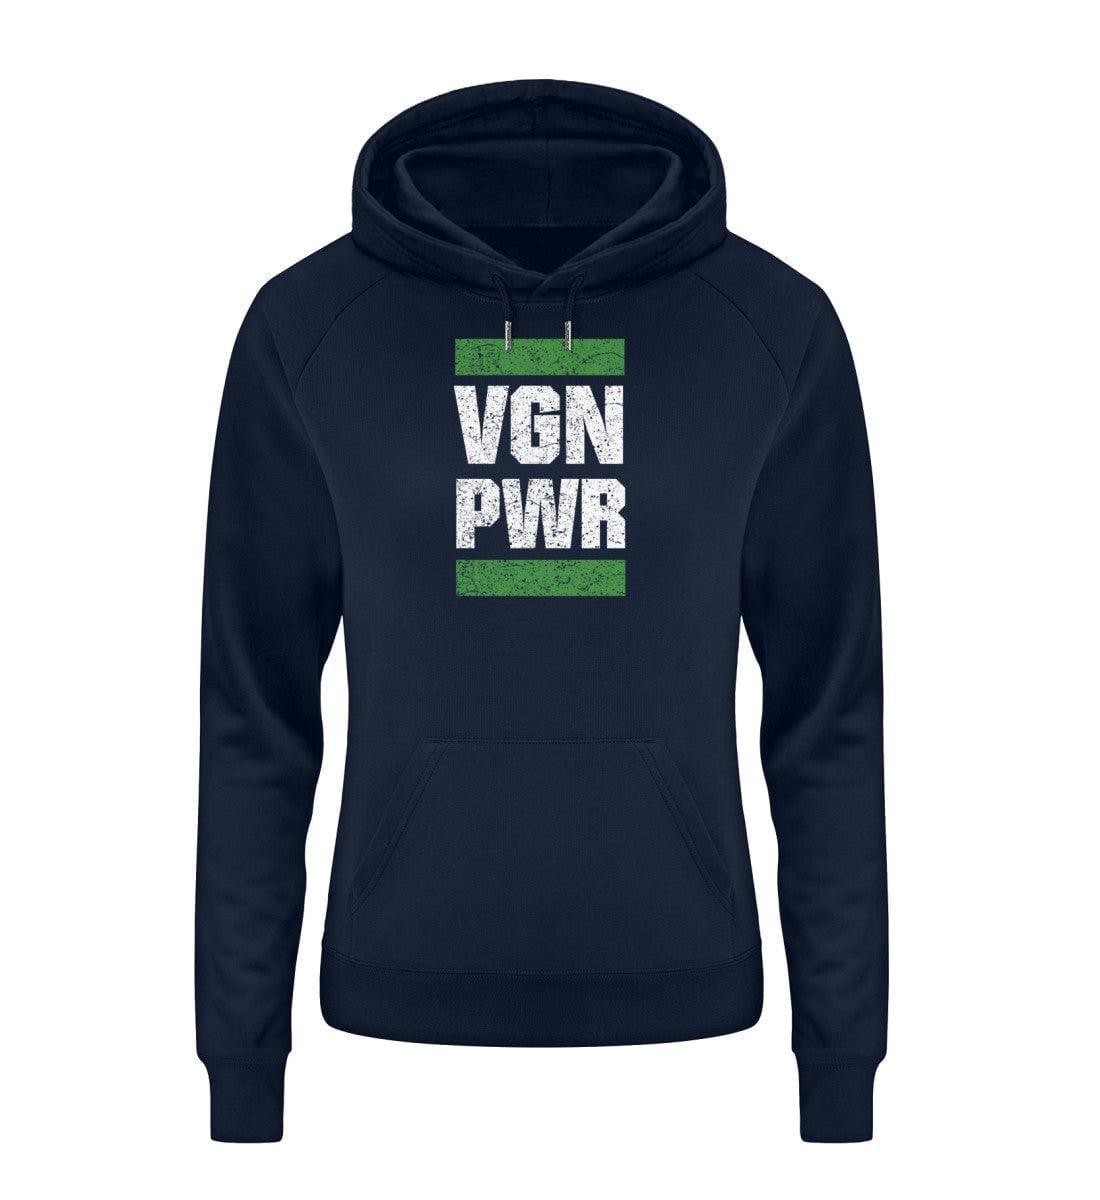 VGN PWR - Damen Premium Hoodie - Team Vegan © vegan t shirt